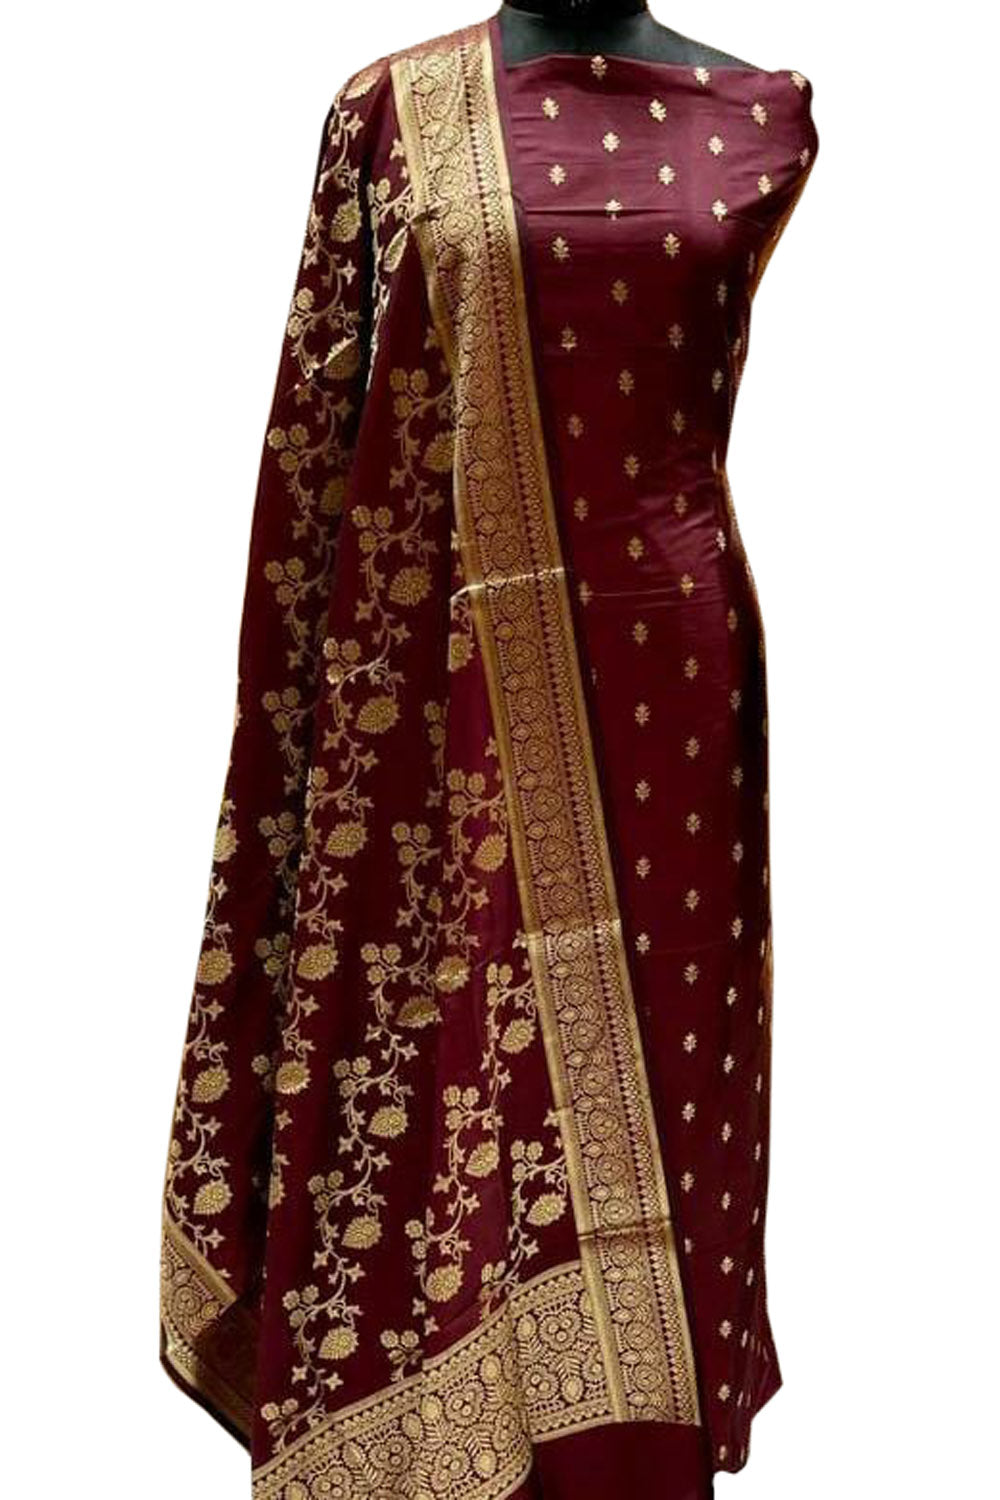 Elegant Maroon Banarasi Silk Suit: A Timeless Classic - Luxurion World